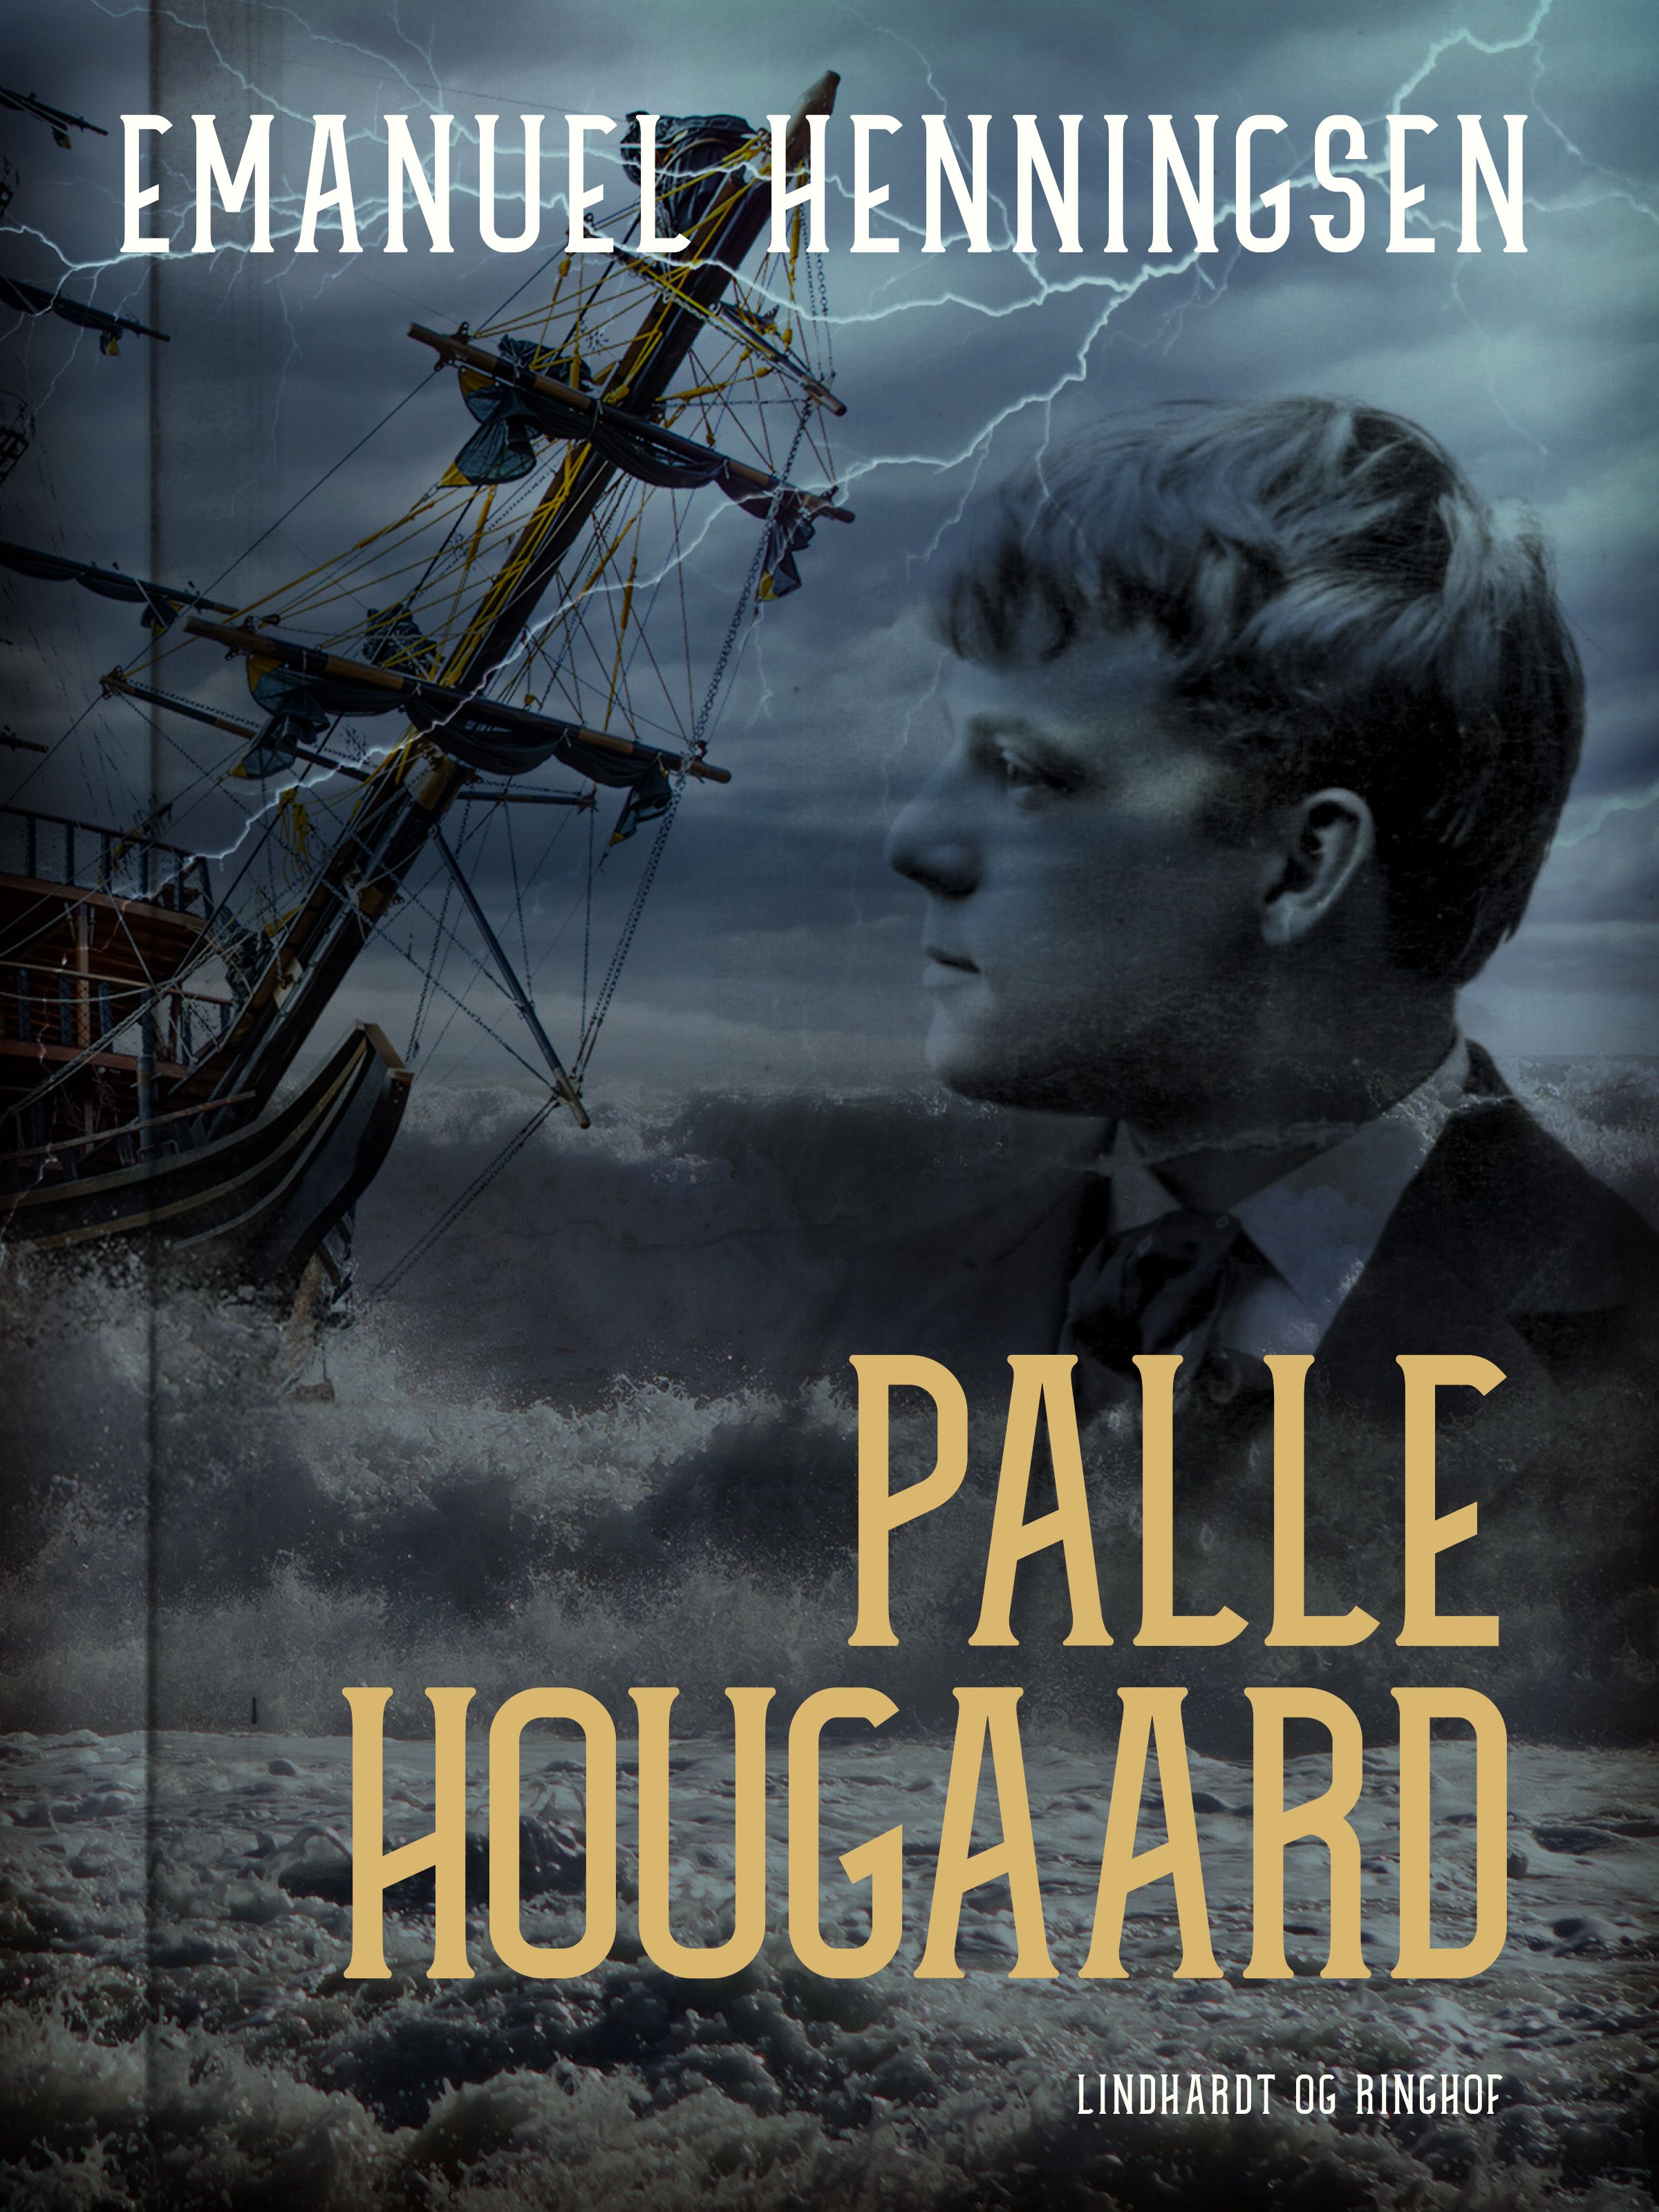 Palle Hougaard, eBook by Emanuel Henningsen